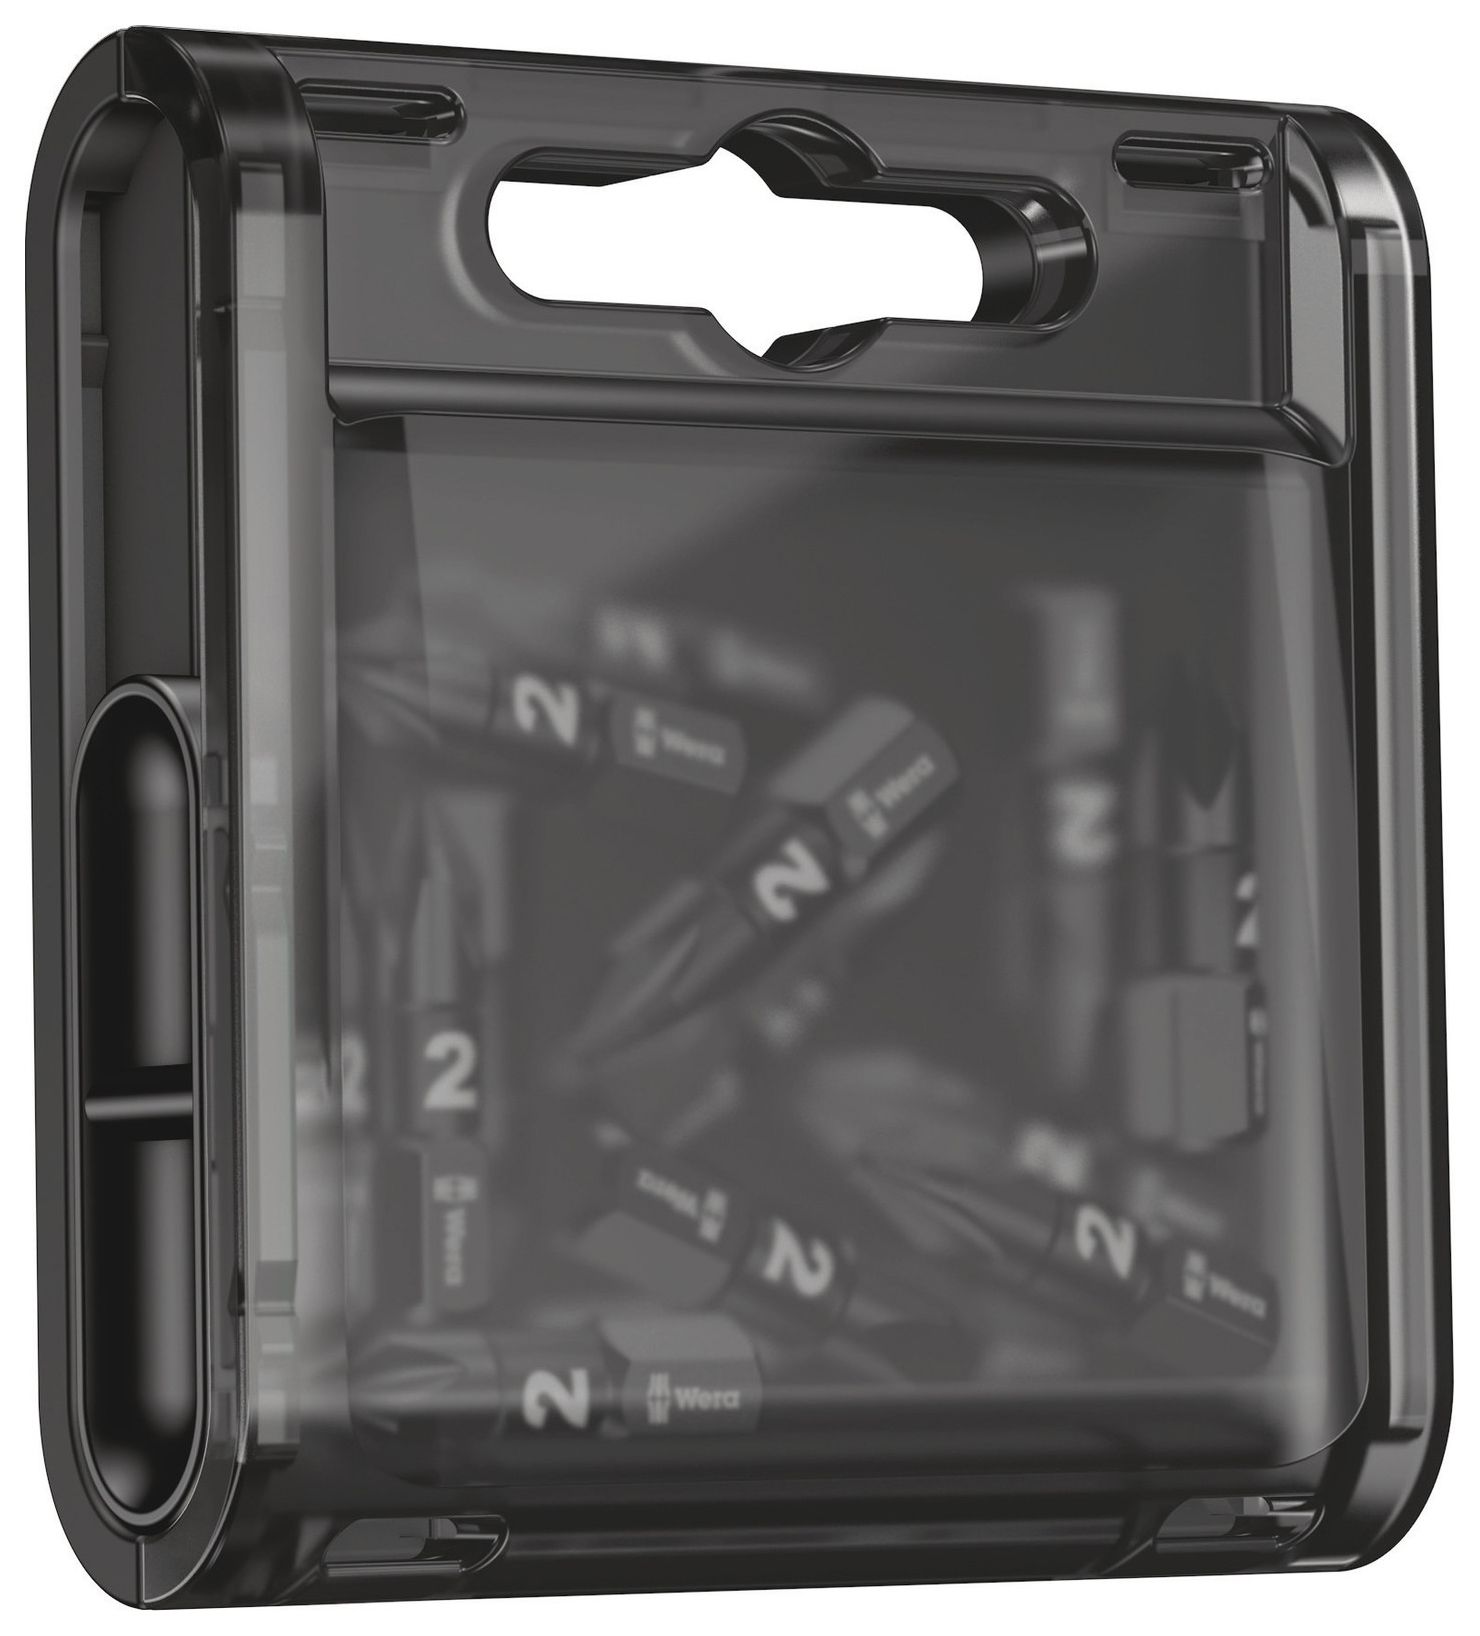 Wera Bit-Box 15 Impaktor TriTorsion Impact Bits with Anti Cam-Out Pozi Drive PZ2 - 2 x 25mm - Pack of 15